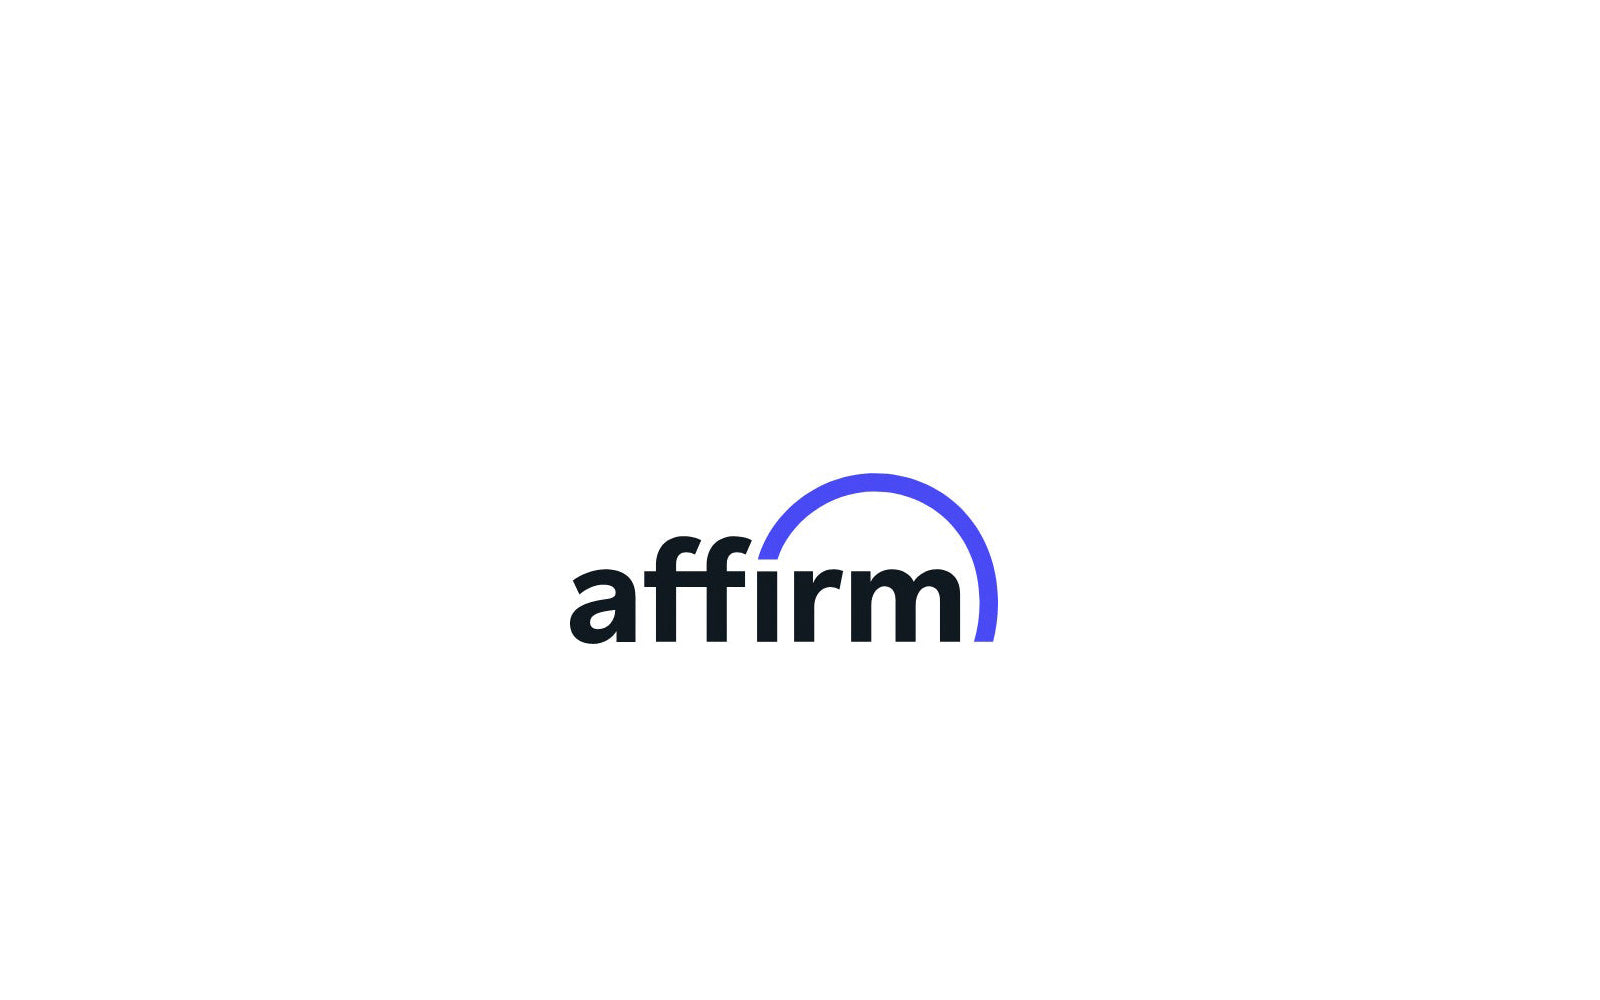 affirm financing logo